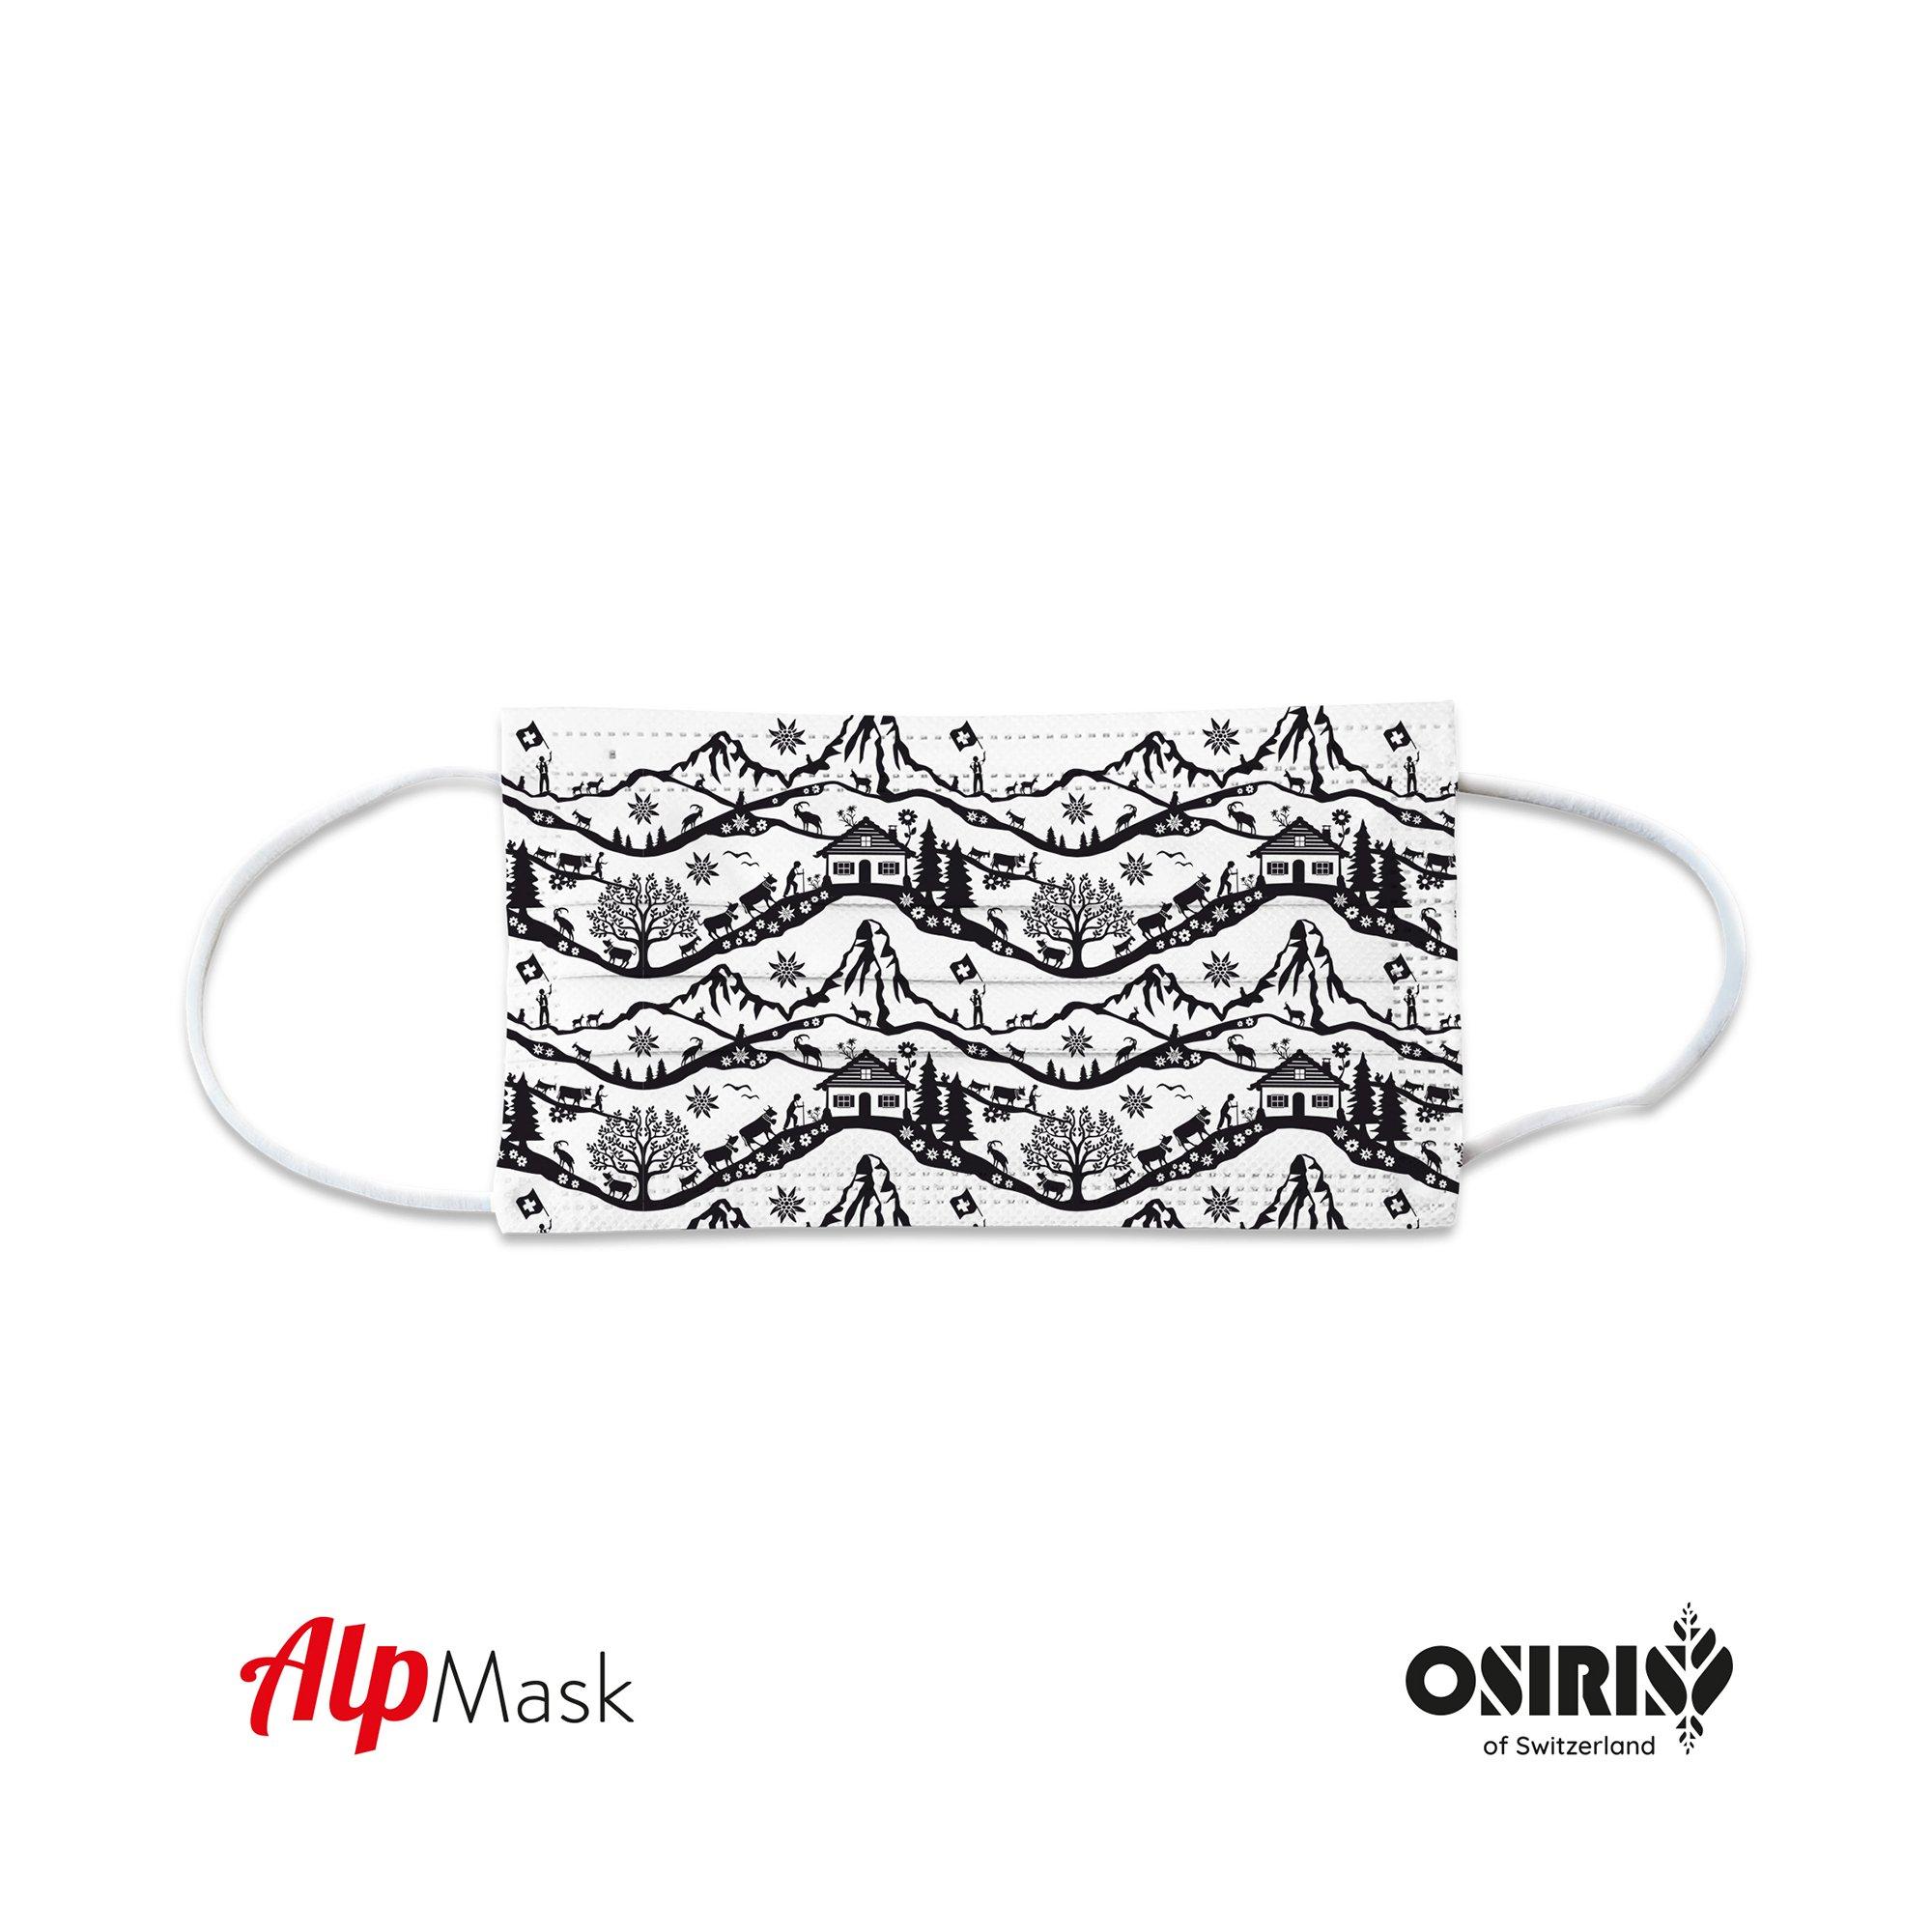 Image of Osiris Hygienemaske Alp Edition, Mundschutzmasken, 50 Stück - 50 Stück